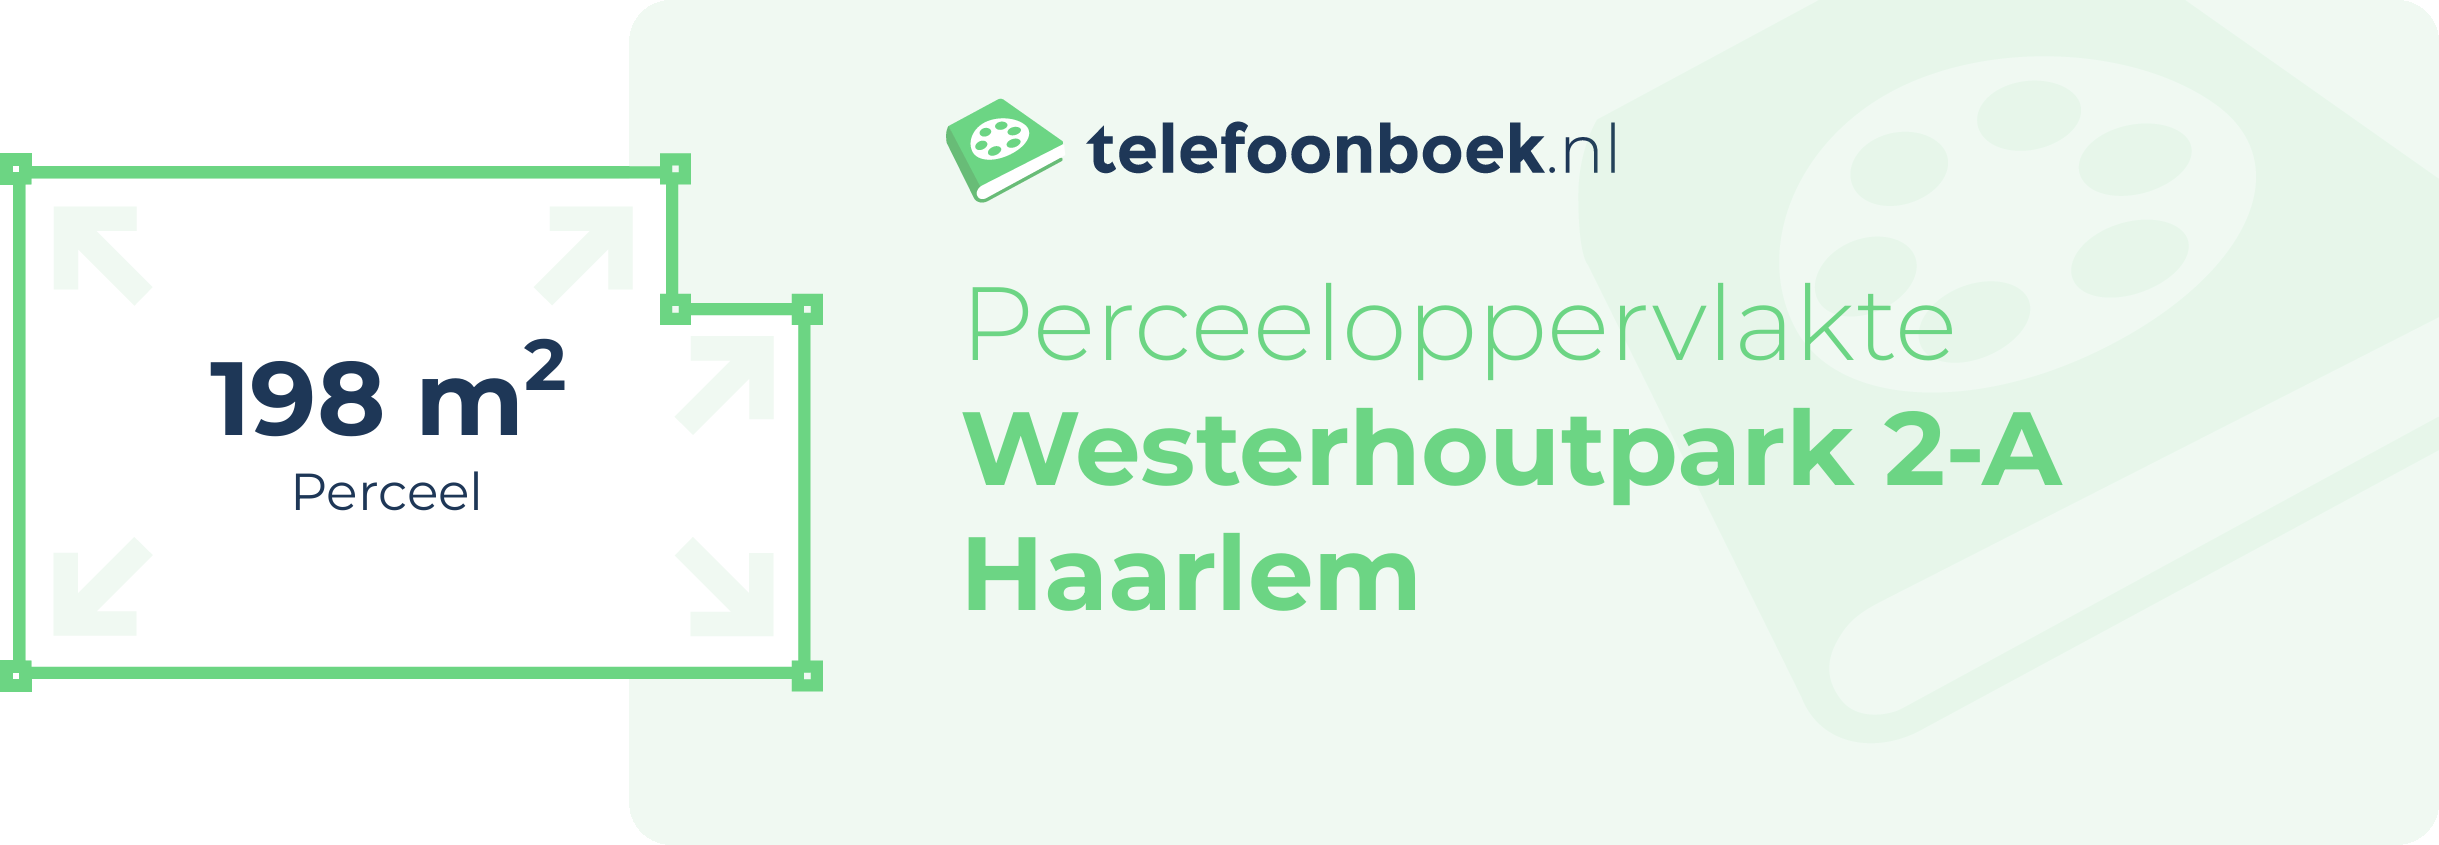 Perceeloppervlakte Westerhoutpark 2-A Haarlem